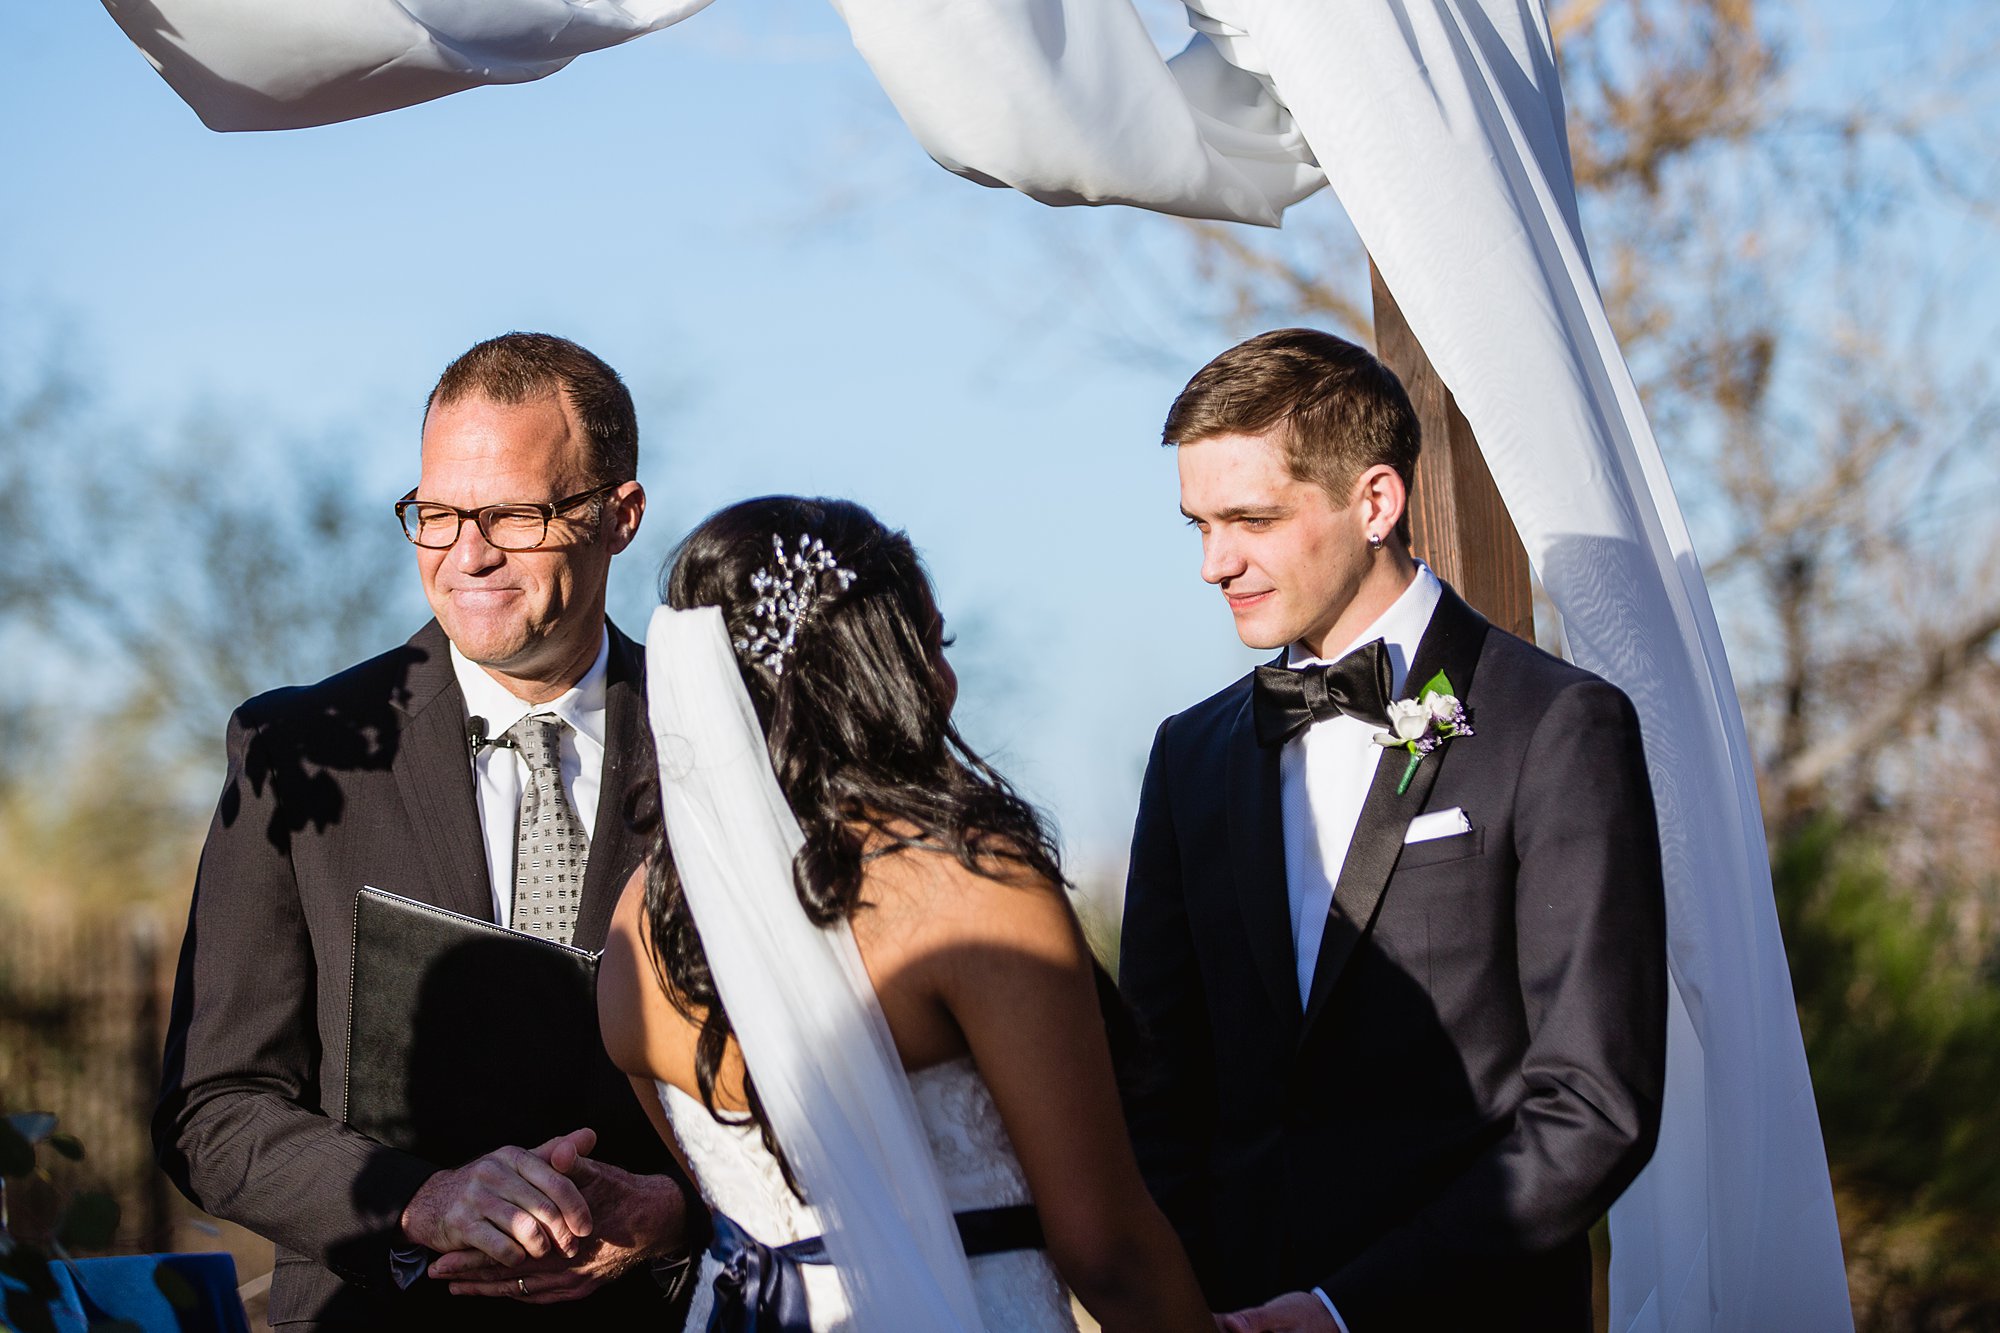 Groom looking at bride during wedding ceremony at the Rio Salado Audubon by Phoenix wedding photographers PMA Photography.